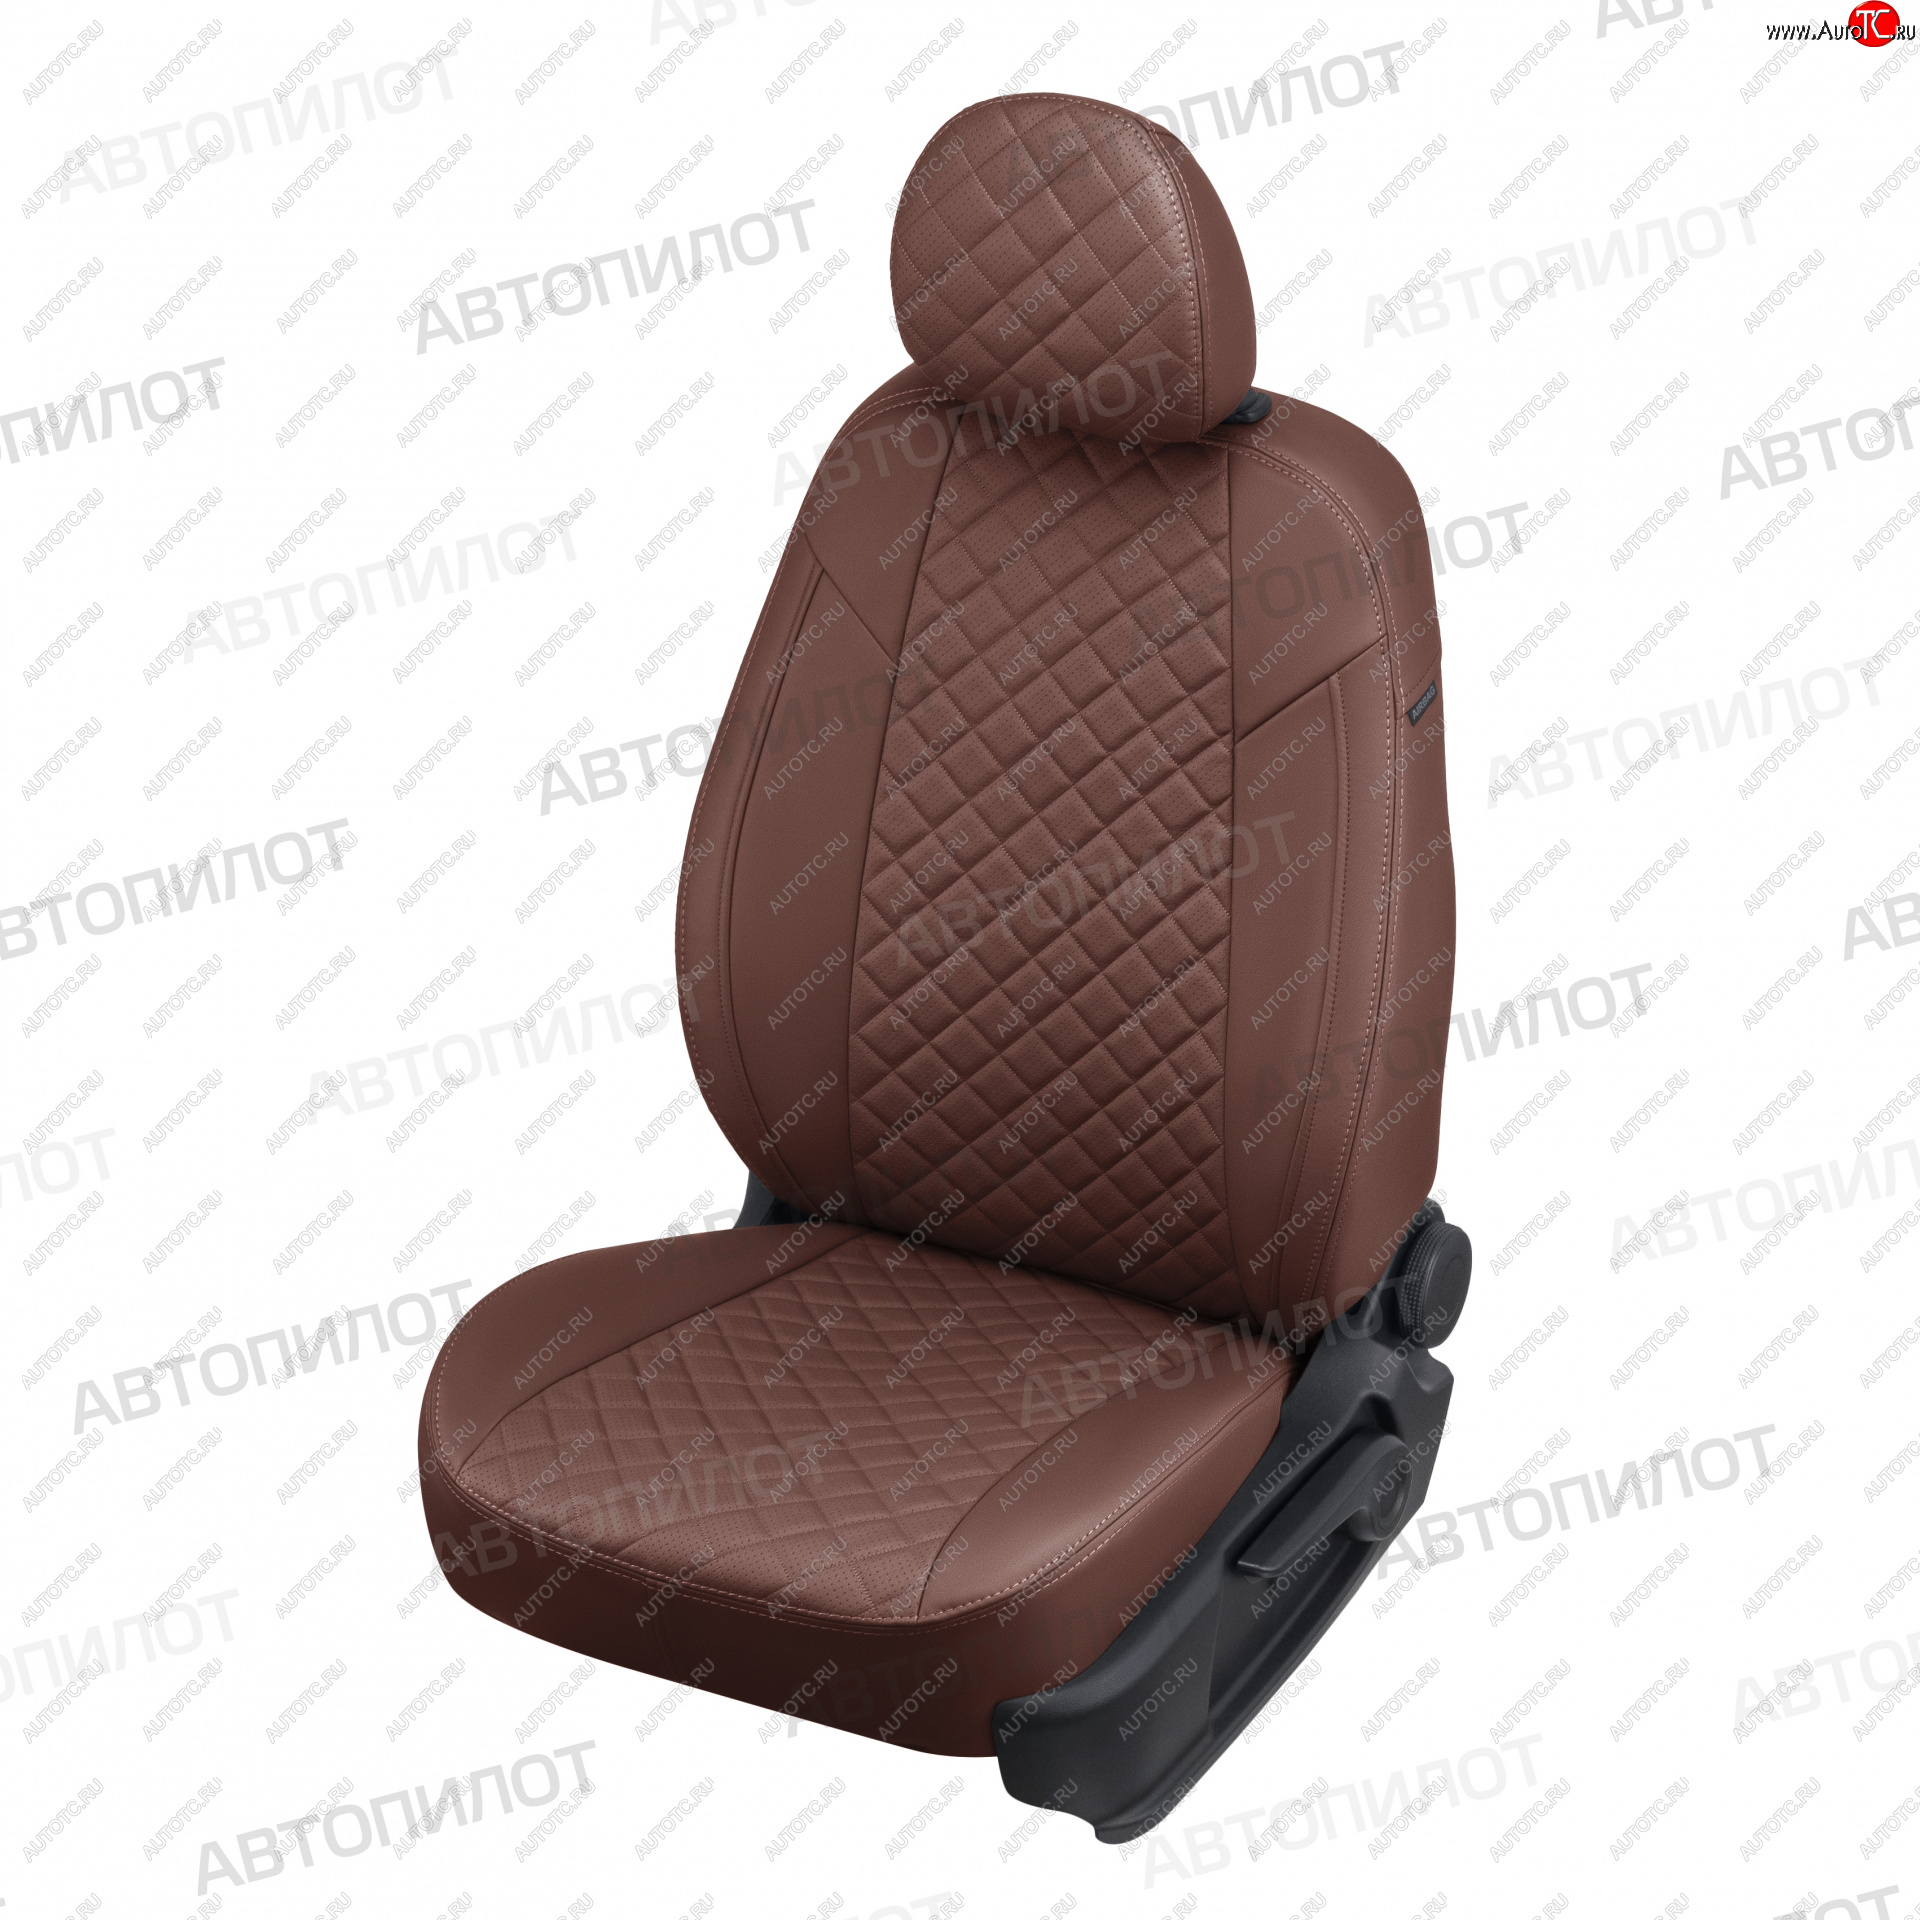 14 499 р. Чехлы сидений (5 мест, экокожа) Автопилот Ромб  Ford Galaxy  WGR (1995-2006) (темно-коричневый)